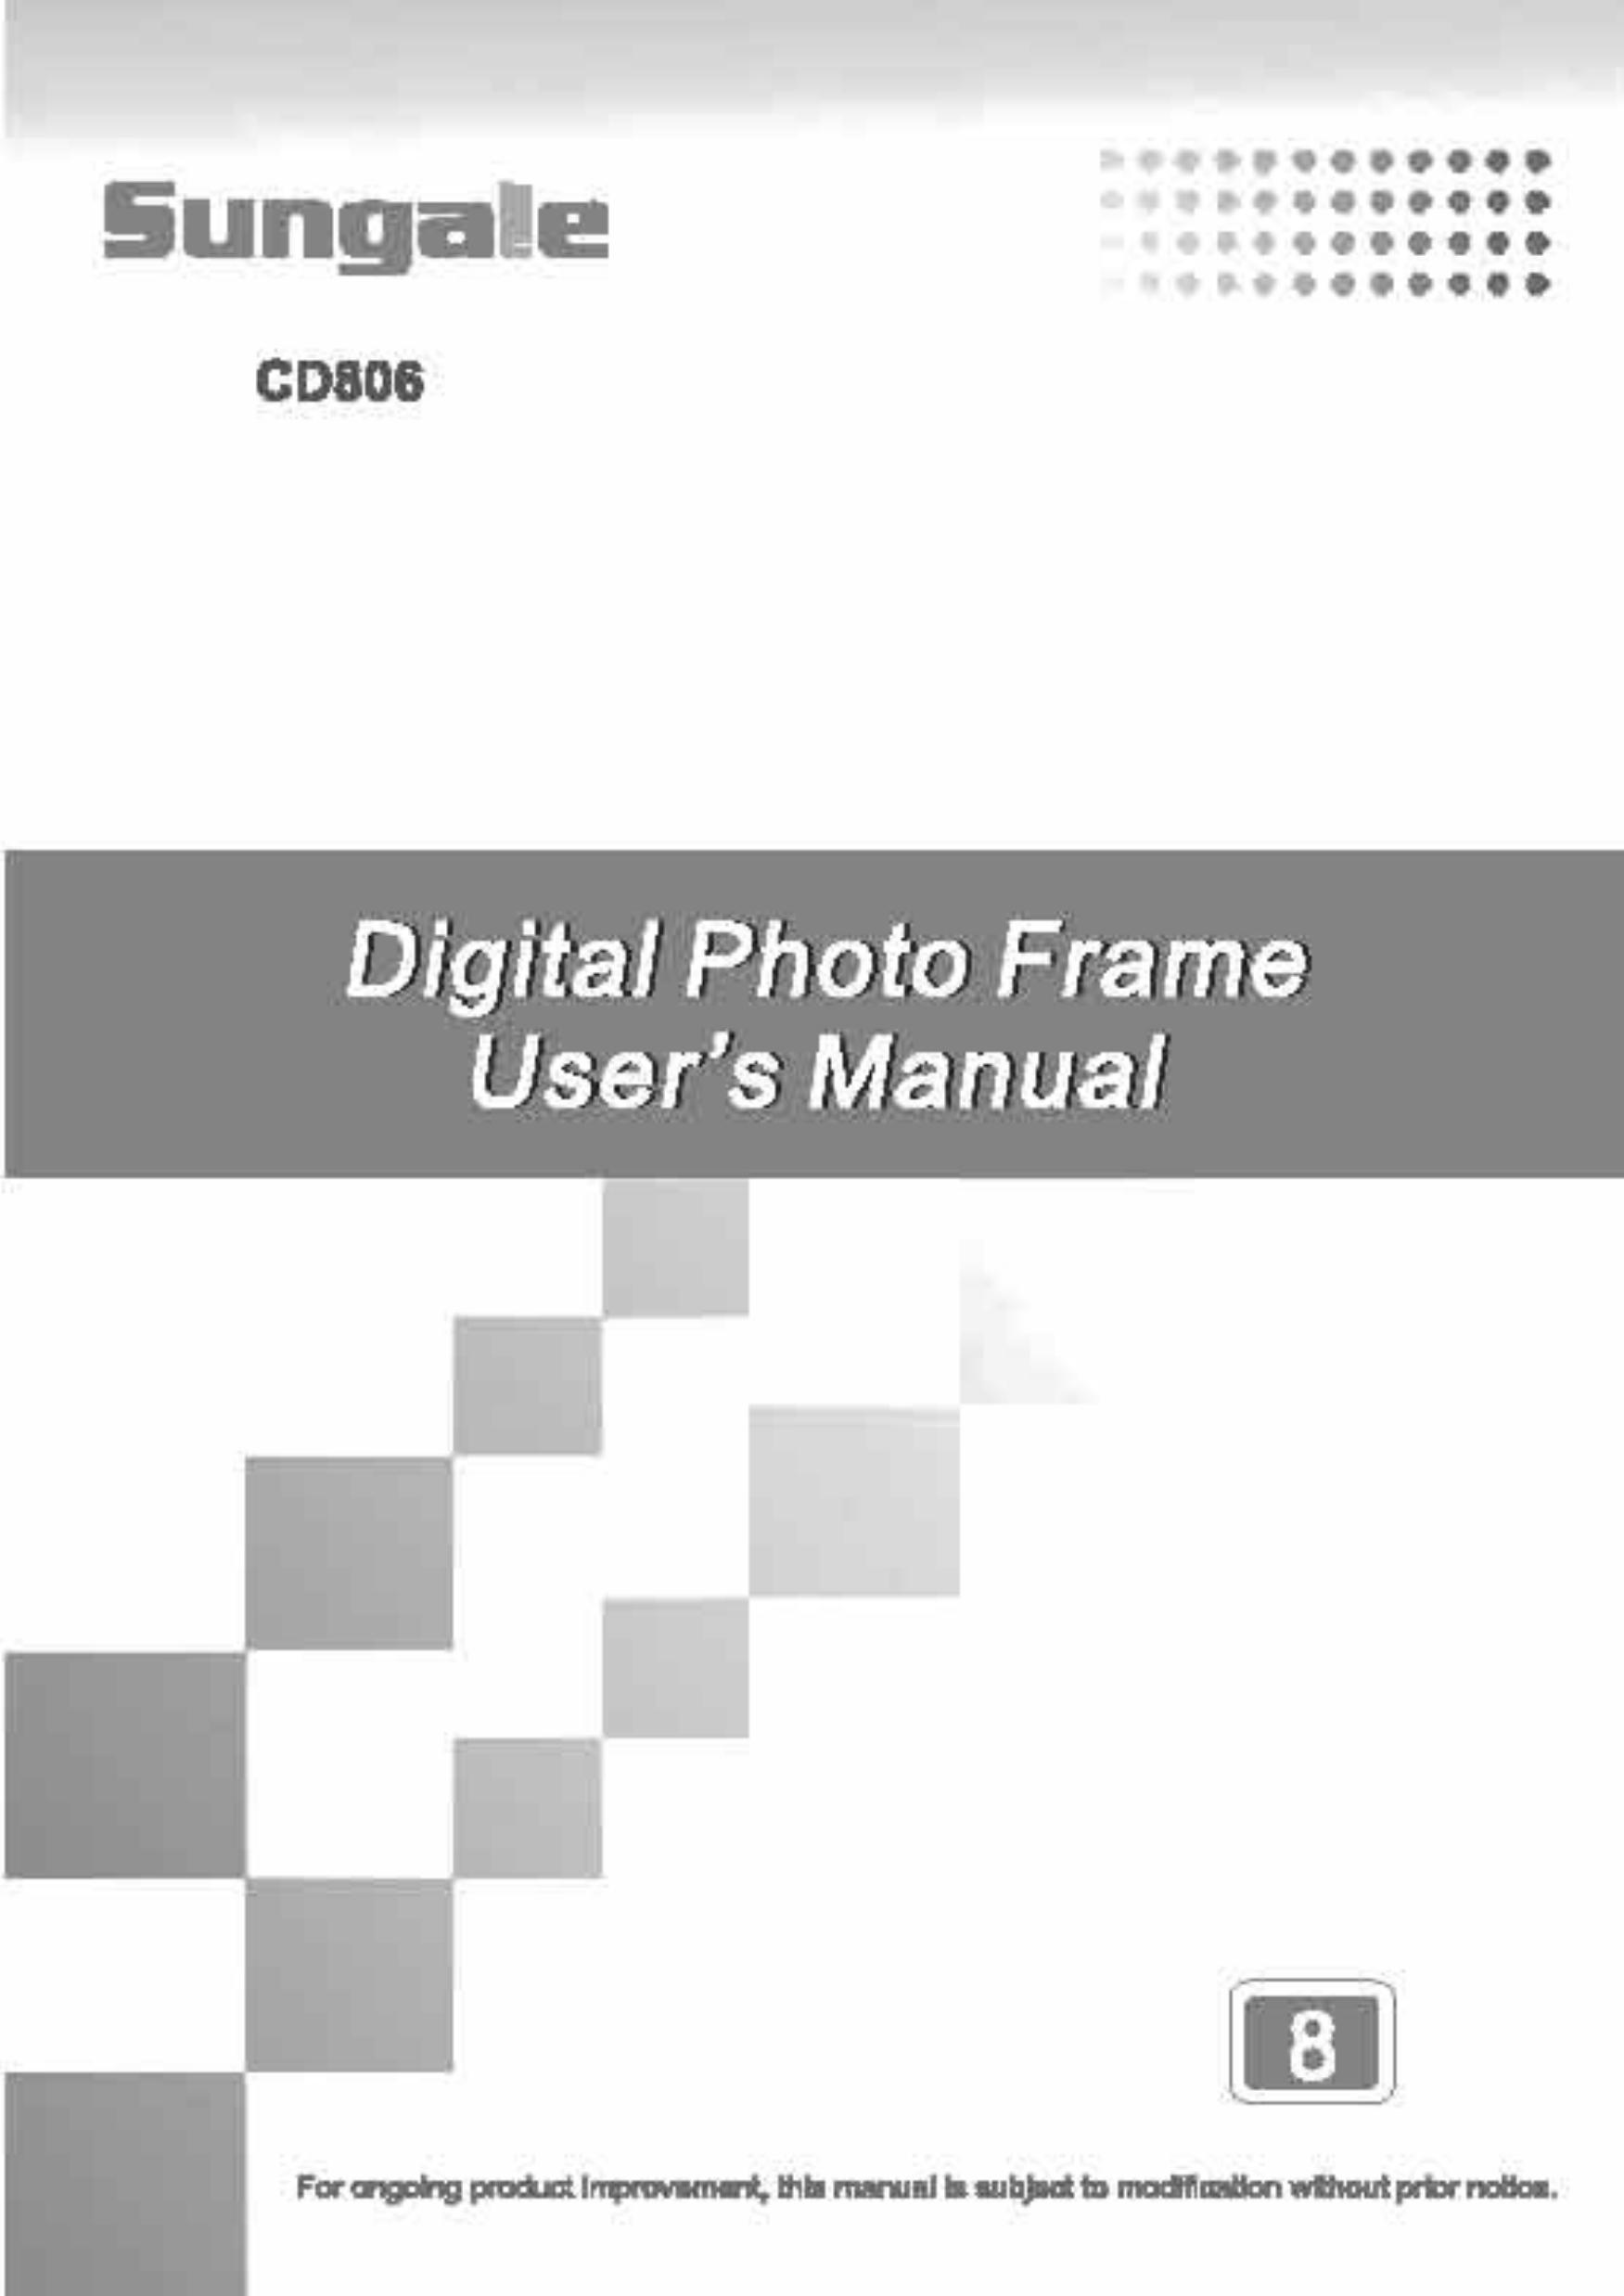 Sungale CD806 Digital Photo Frame User Manual